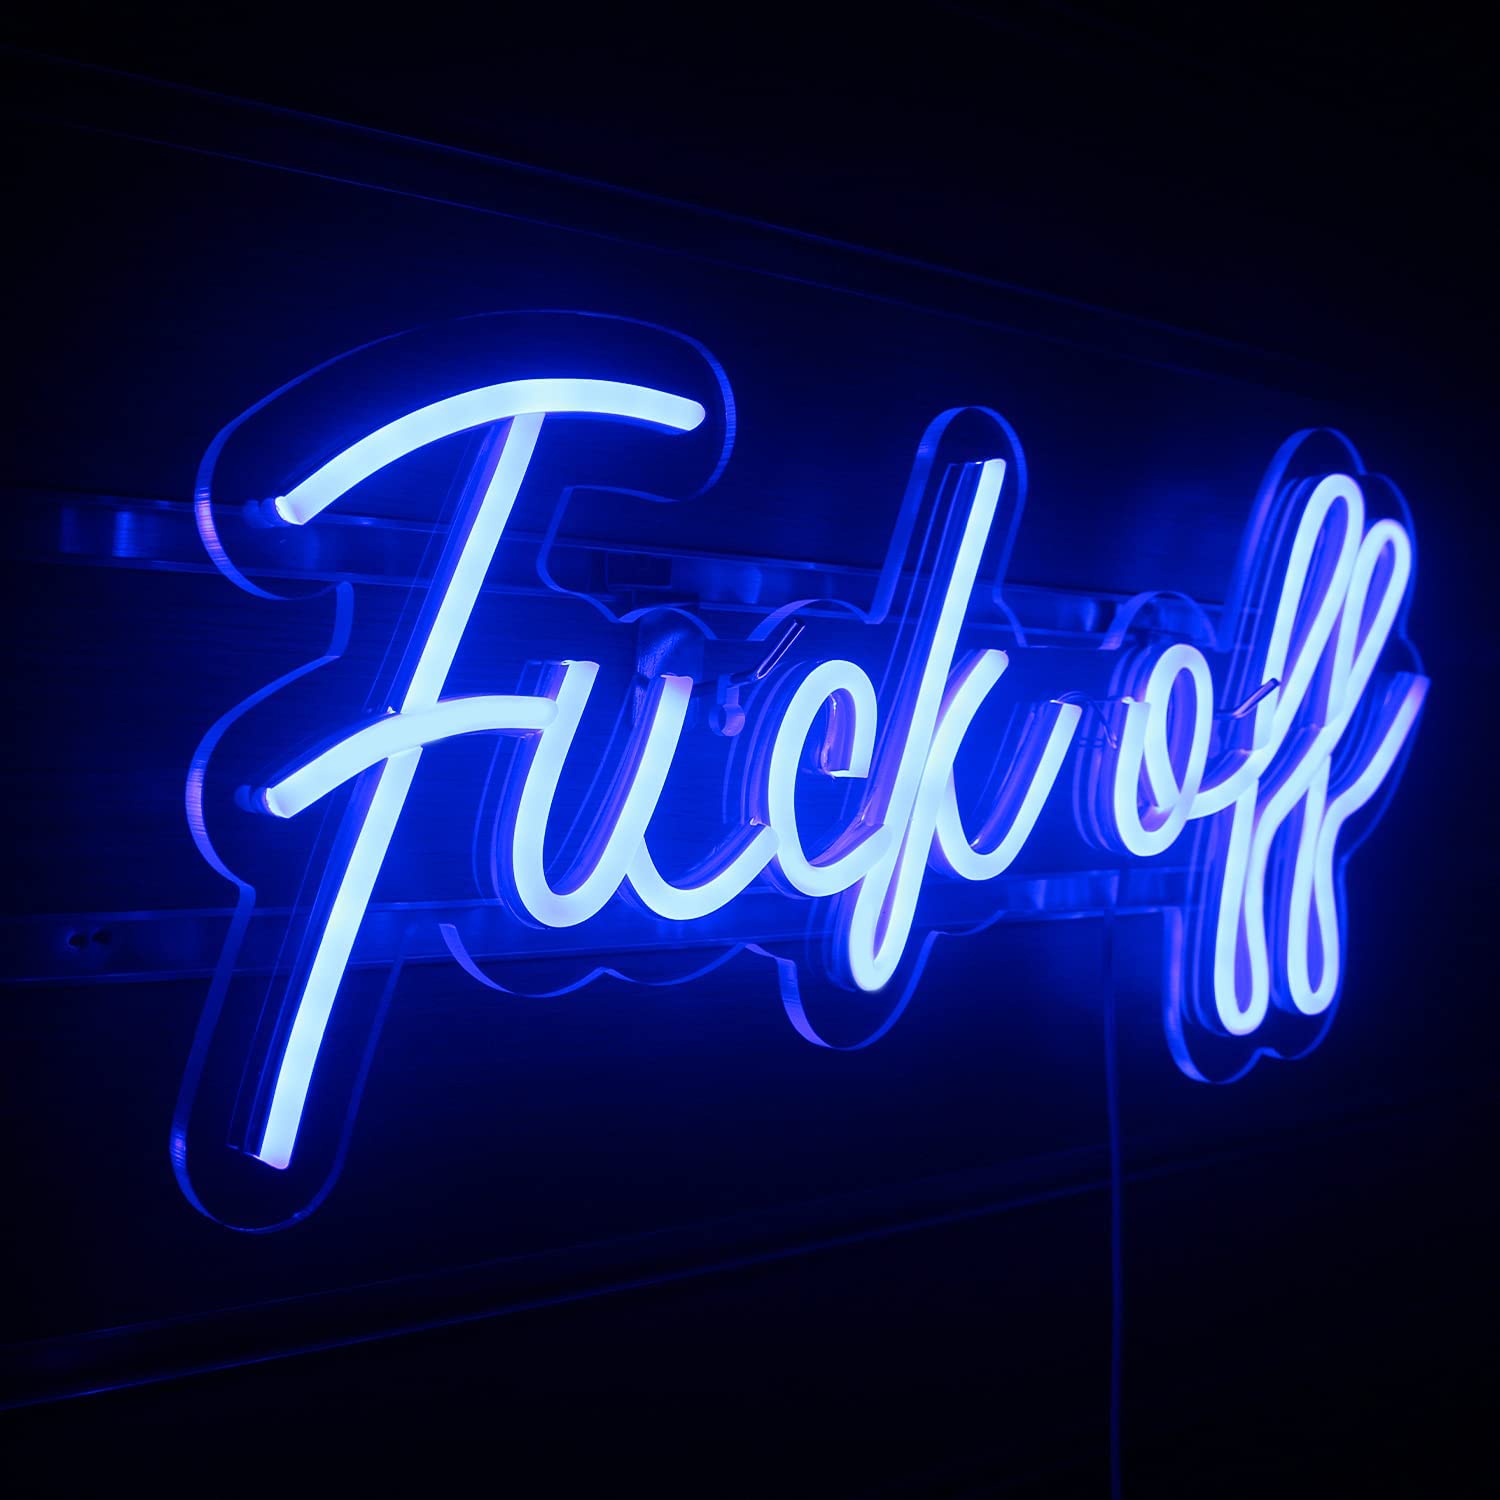 Neon "Fuck Off" Sign